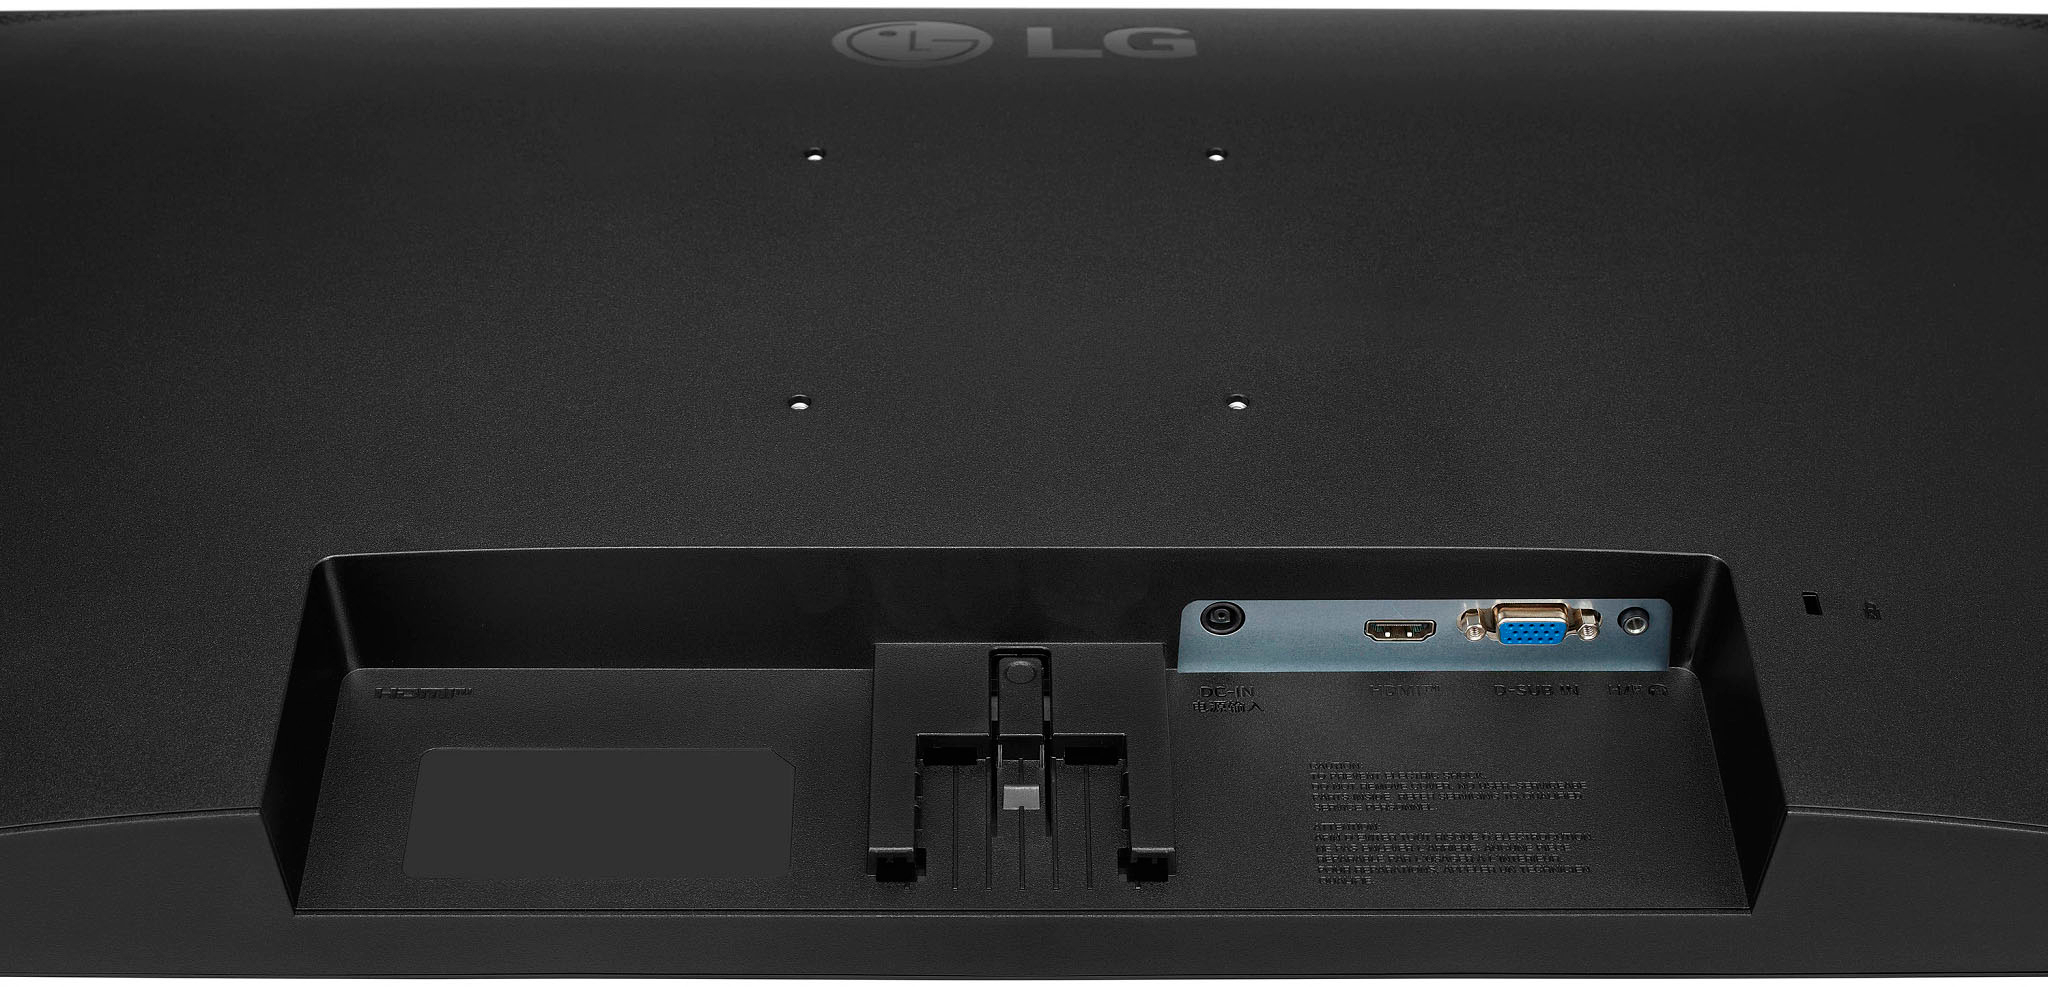 LG 27 FHD IPS 3-Side Borderless Monitor with Anti-Glare & AMD